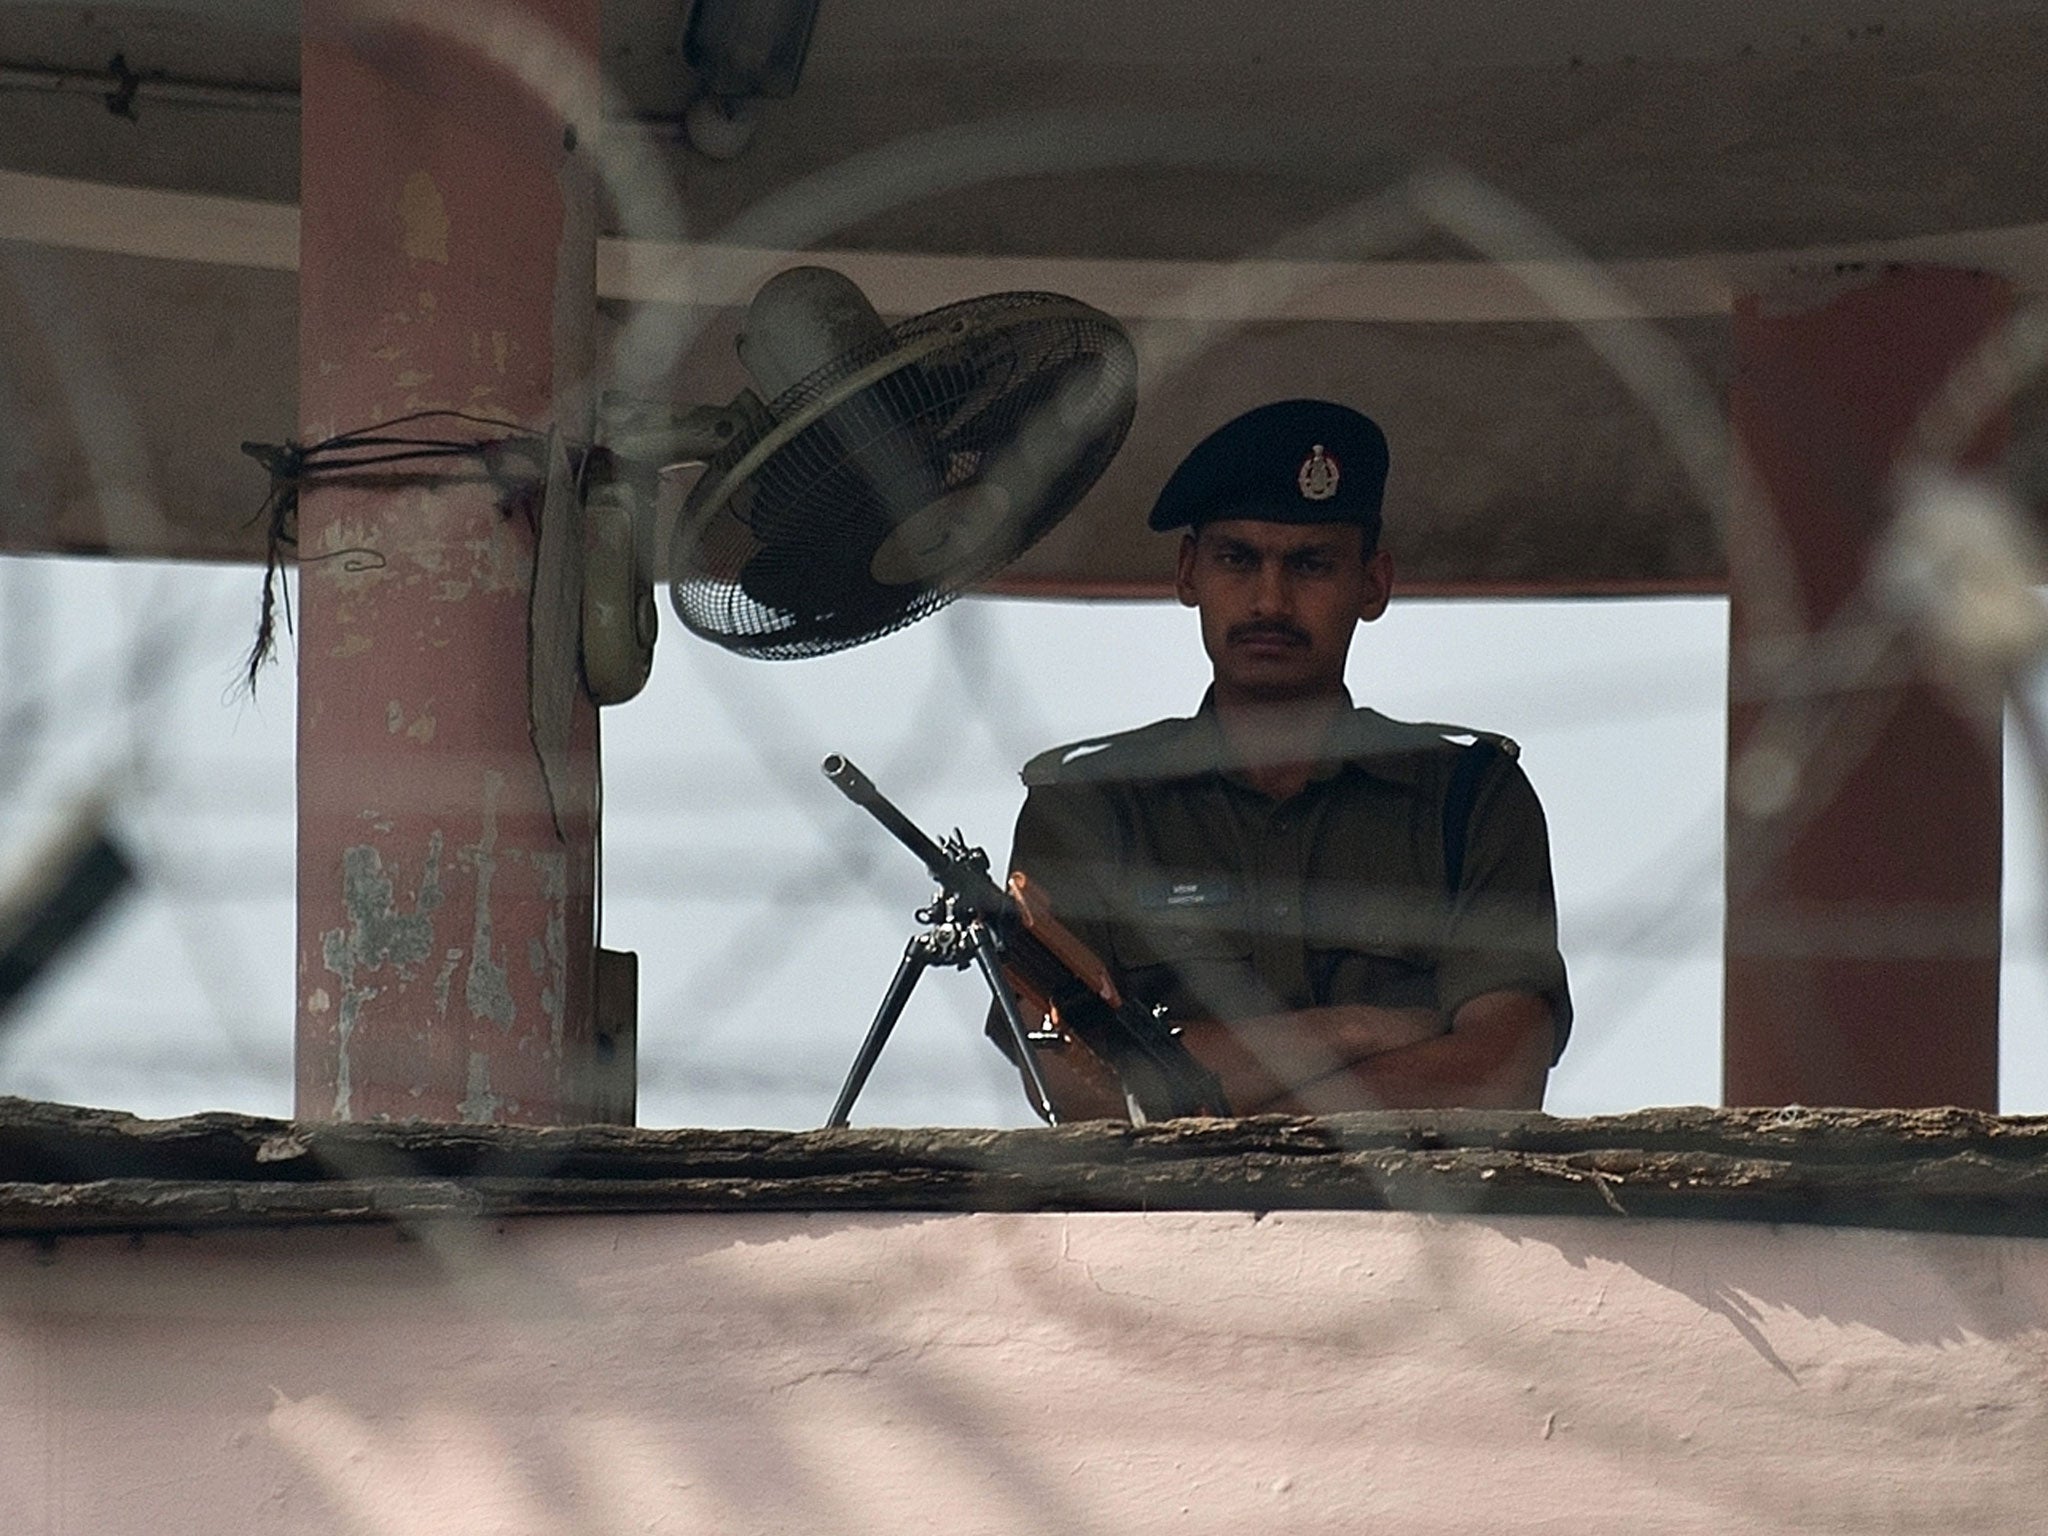 A guard at Delhi’s Tihar jail